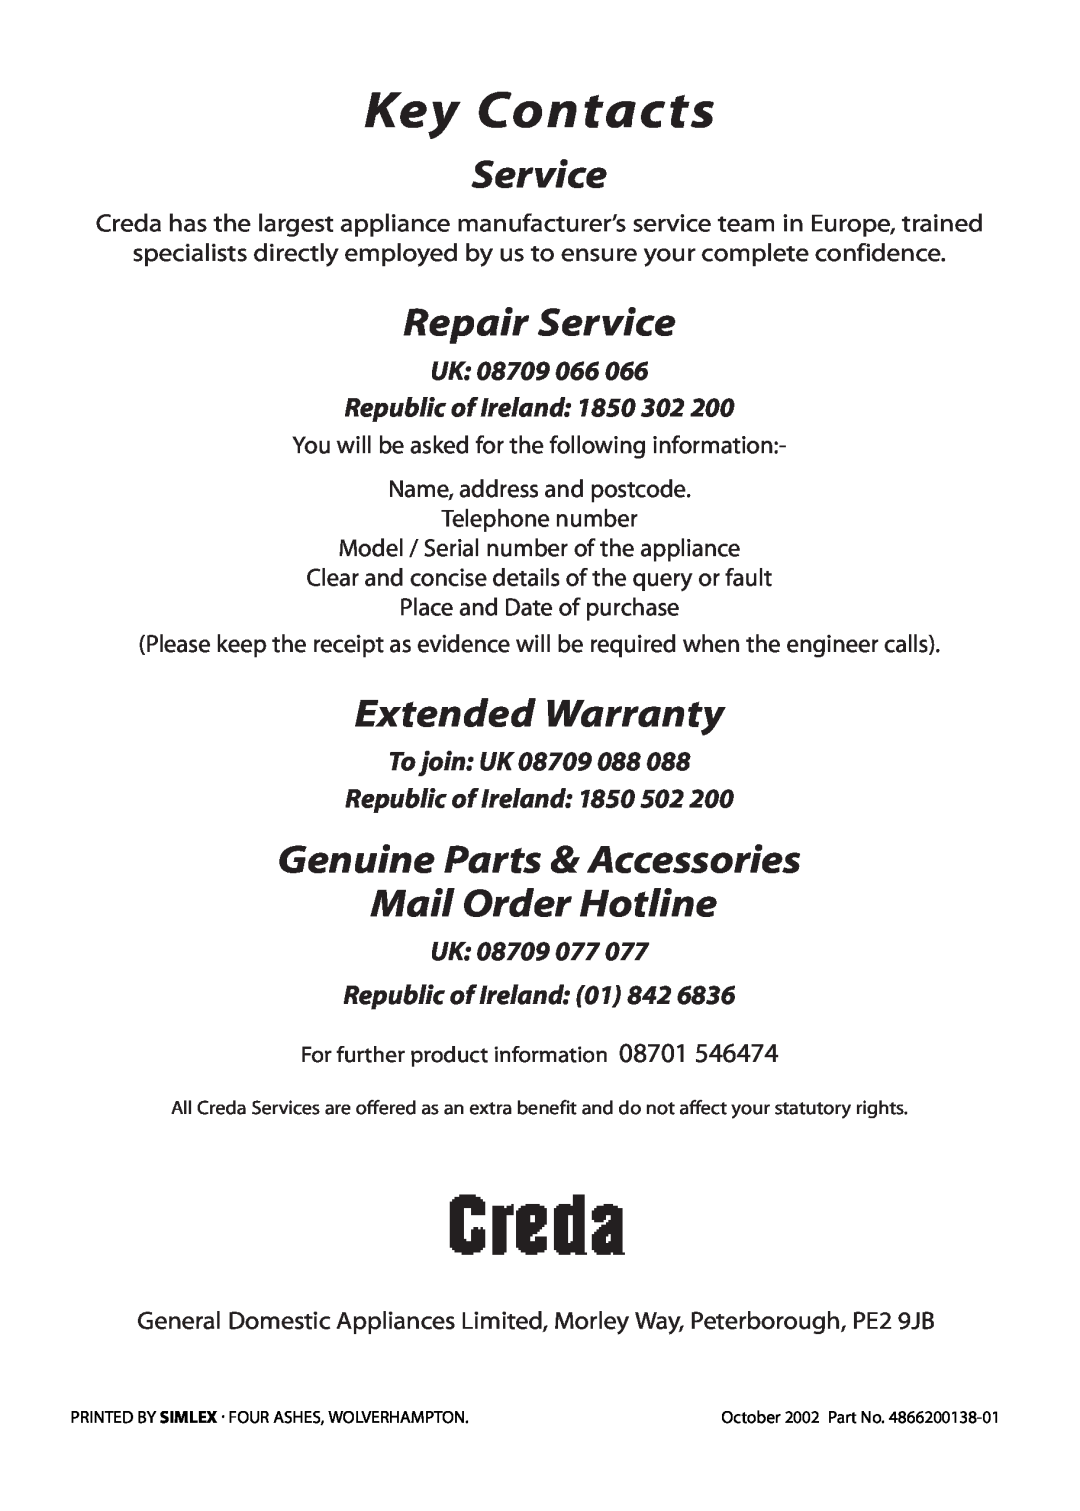 Creda R420E, E420E Key Contacts, Repair Service, Extended Warranty, Genuine Parts & Accessories Mail Order Hotline 